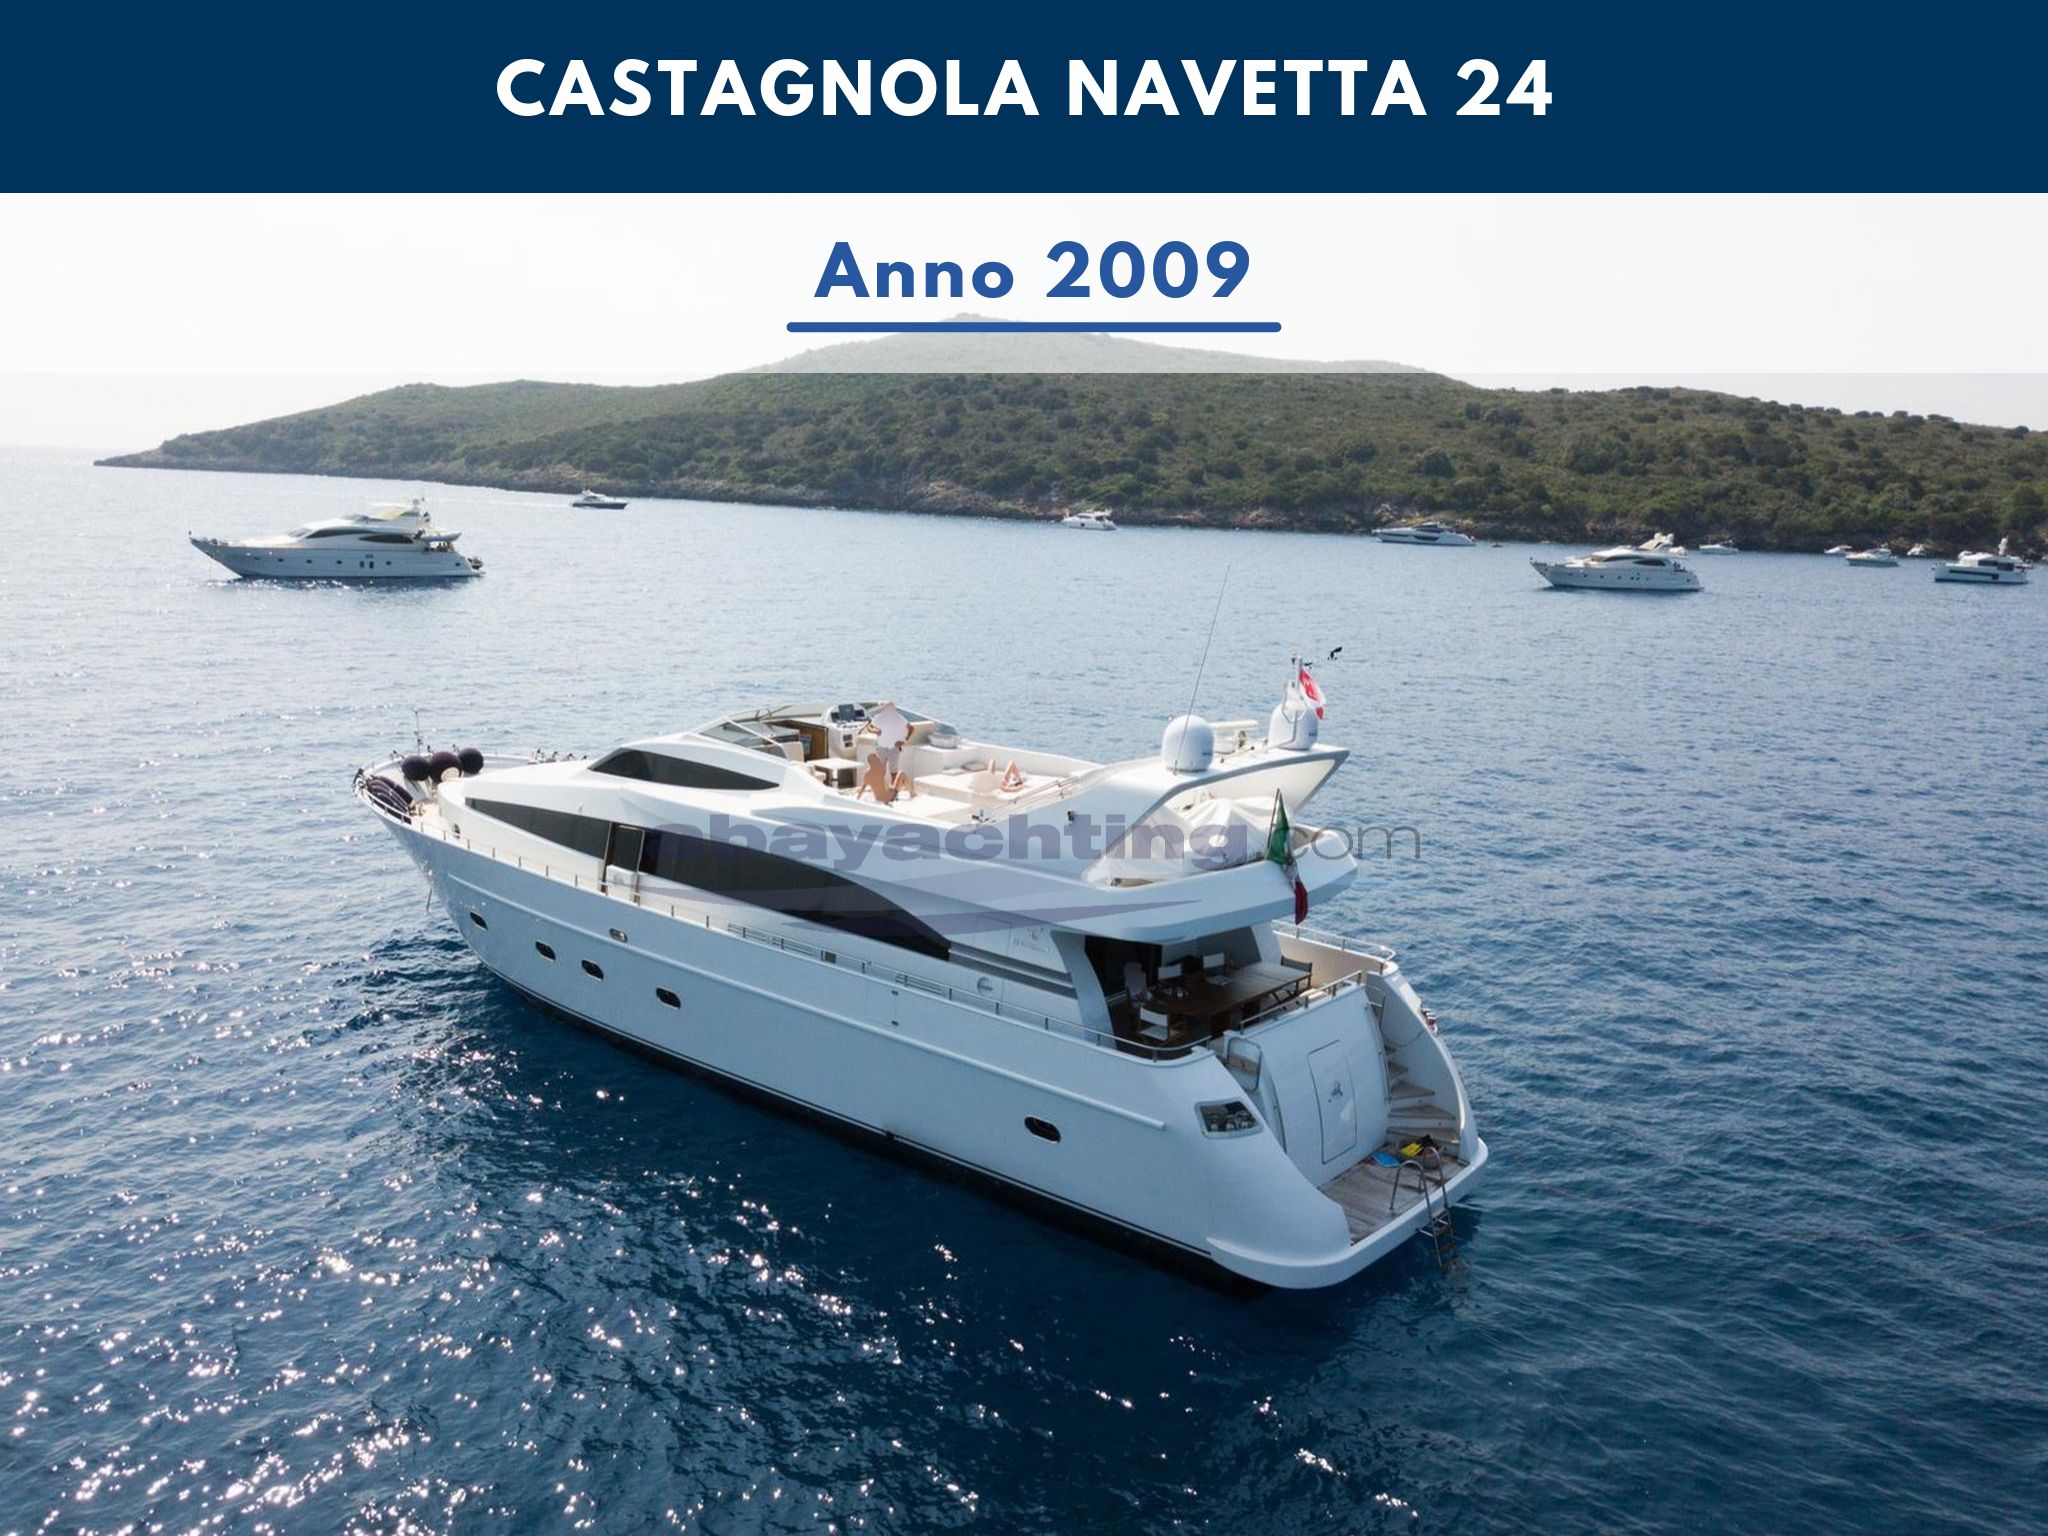 New Arrival Castagnola Navetta 24